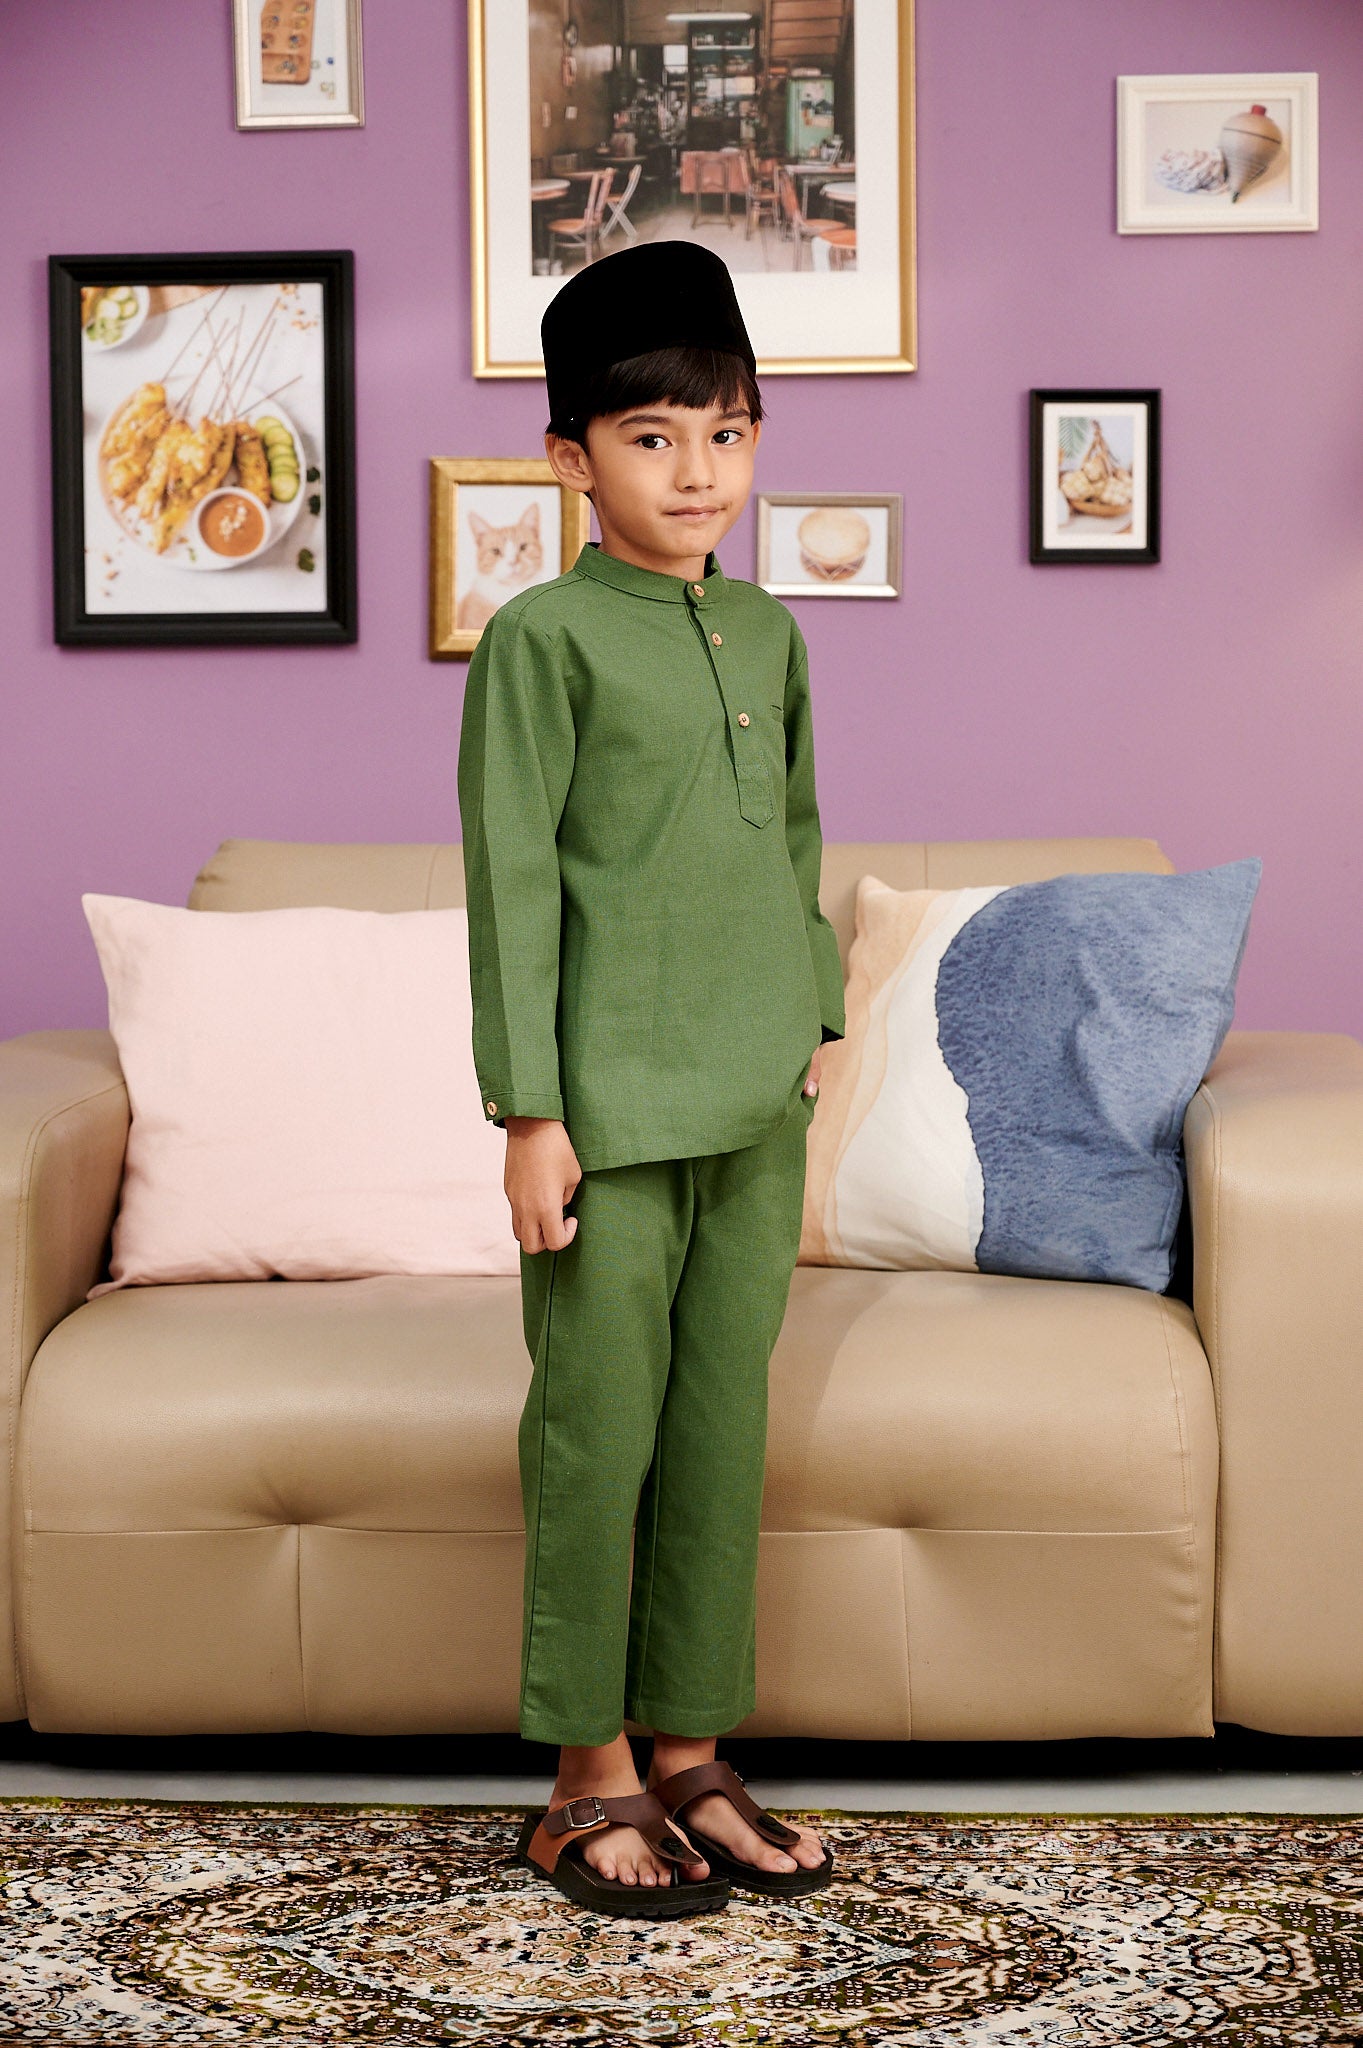 The Kenangan Raya Boy Baju Melayu Set Pine Green